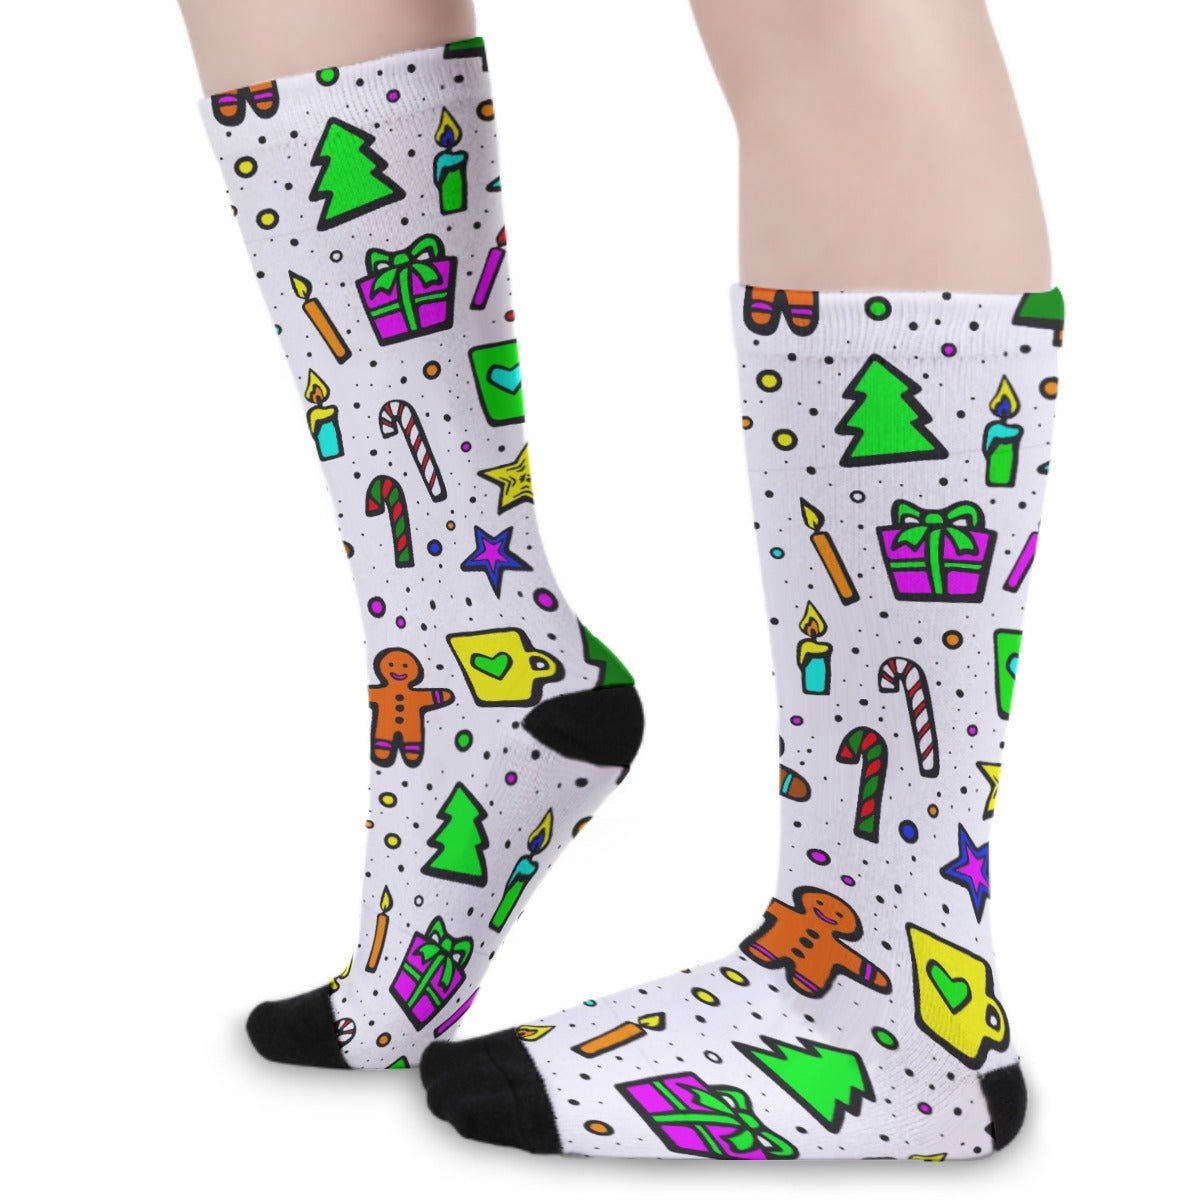 Unisex Long Socks - Bright Doodle - Festive Style